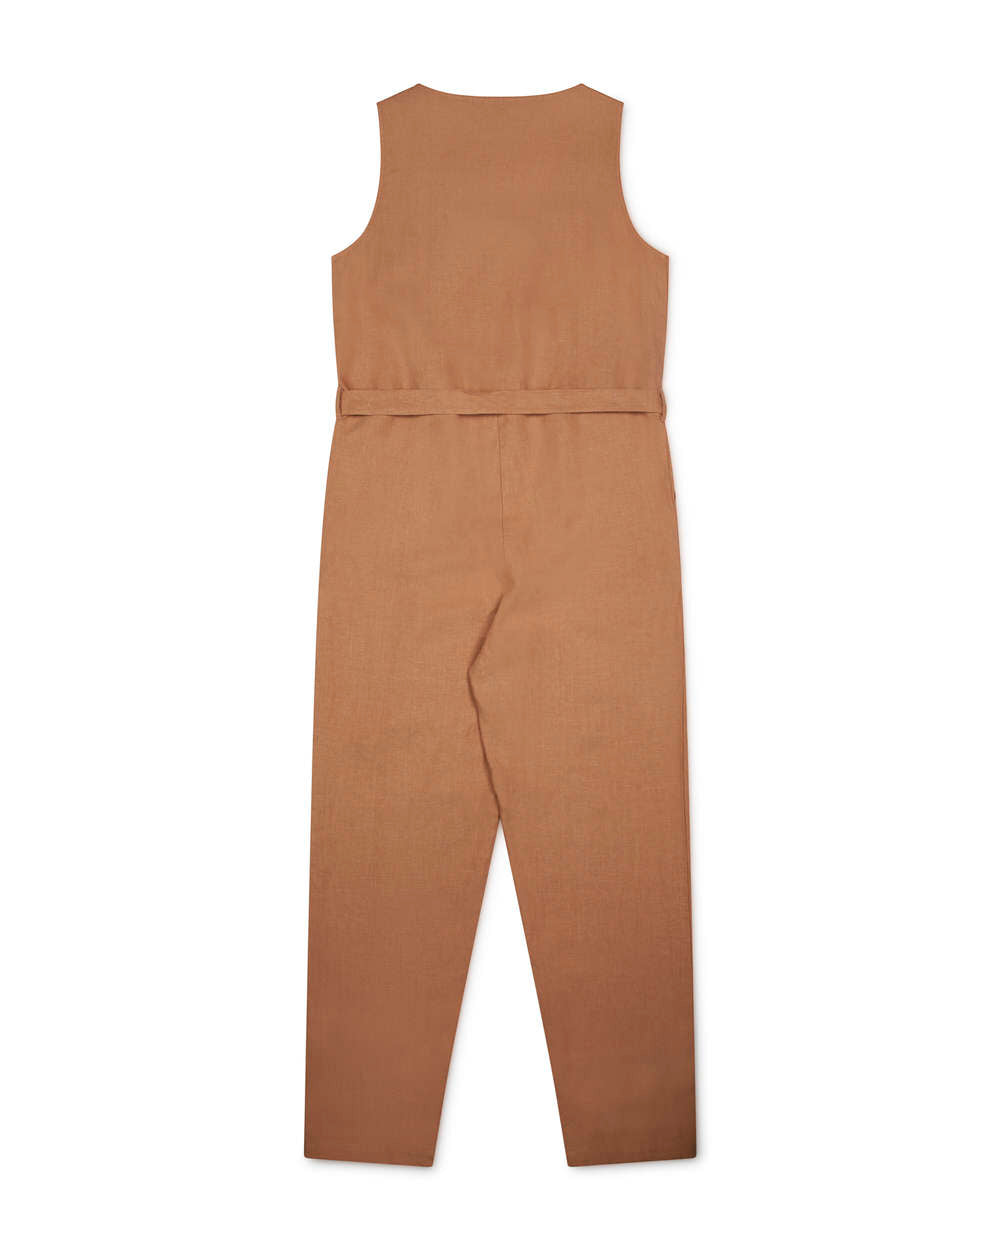 Brown linen hazel jumpsuit from Matona